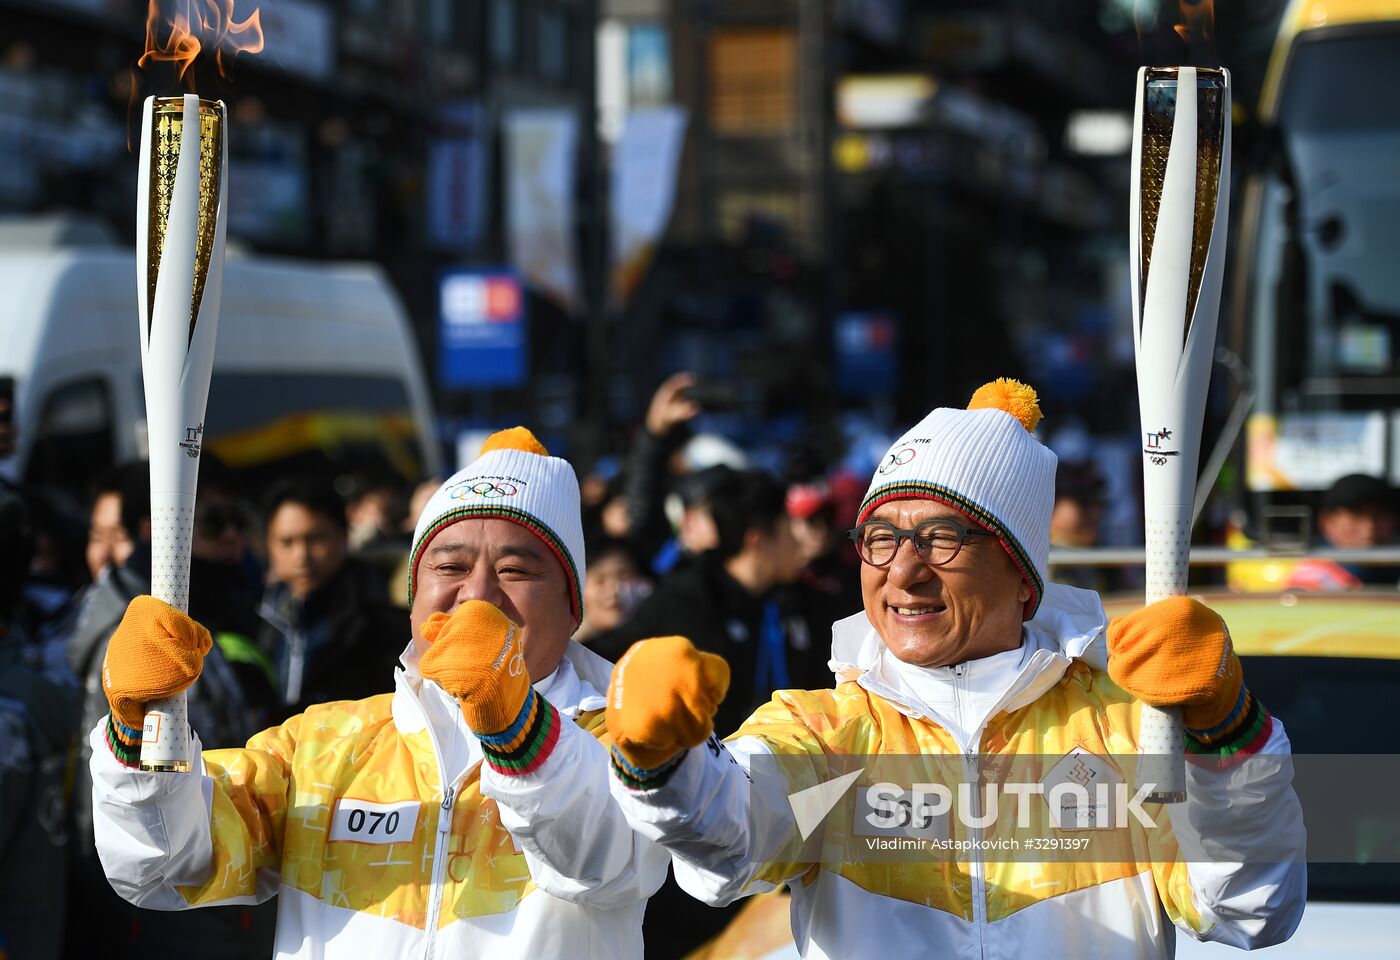 Torch relay in PyeongChang